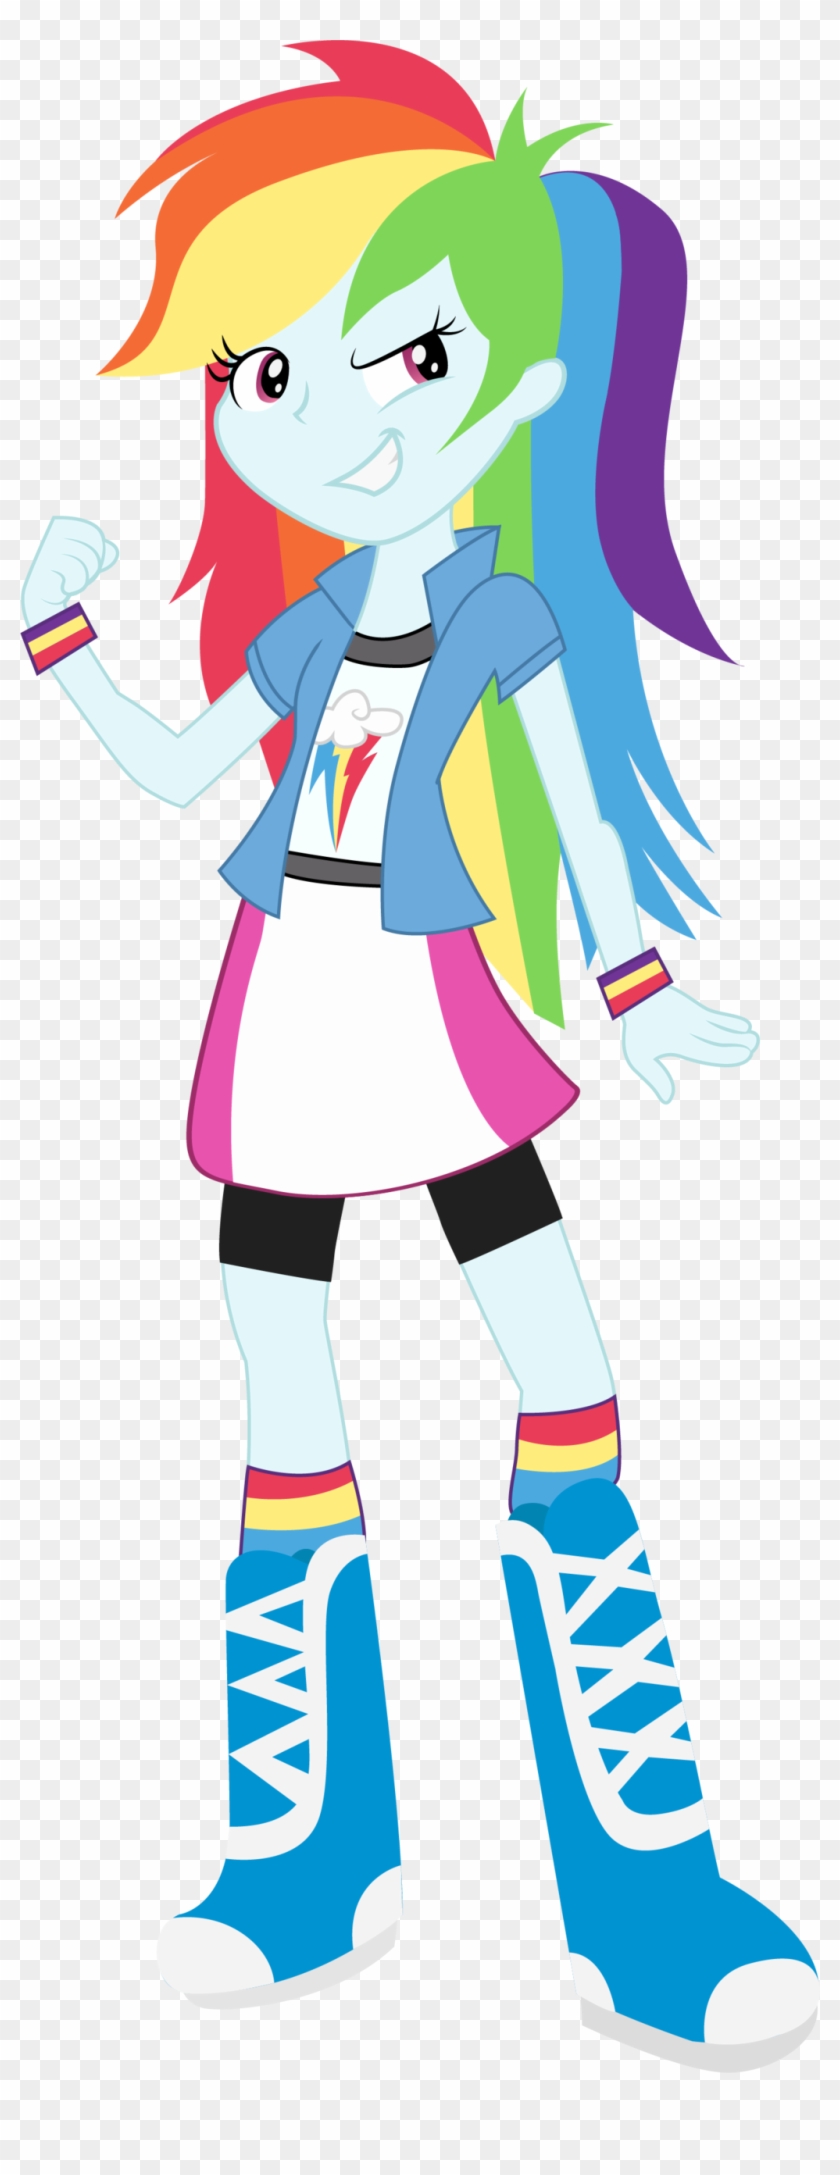 My Little Pony Friendship Is Magic Equestria Girls - Rainbow Dash #340189